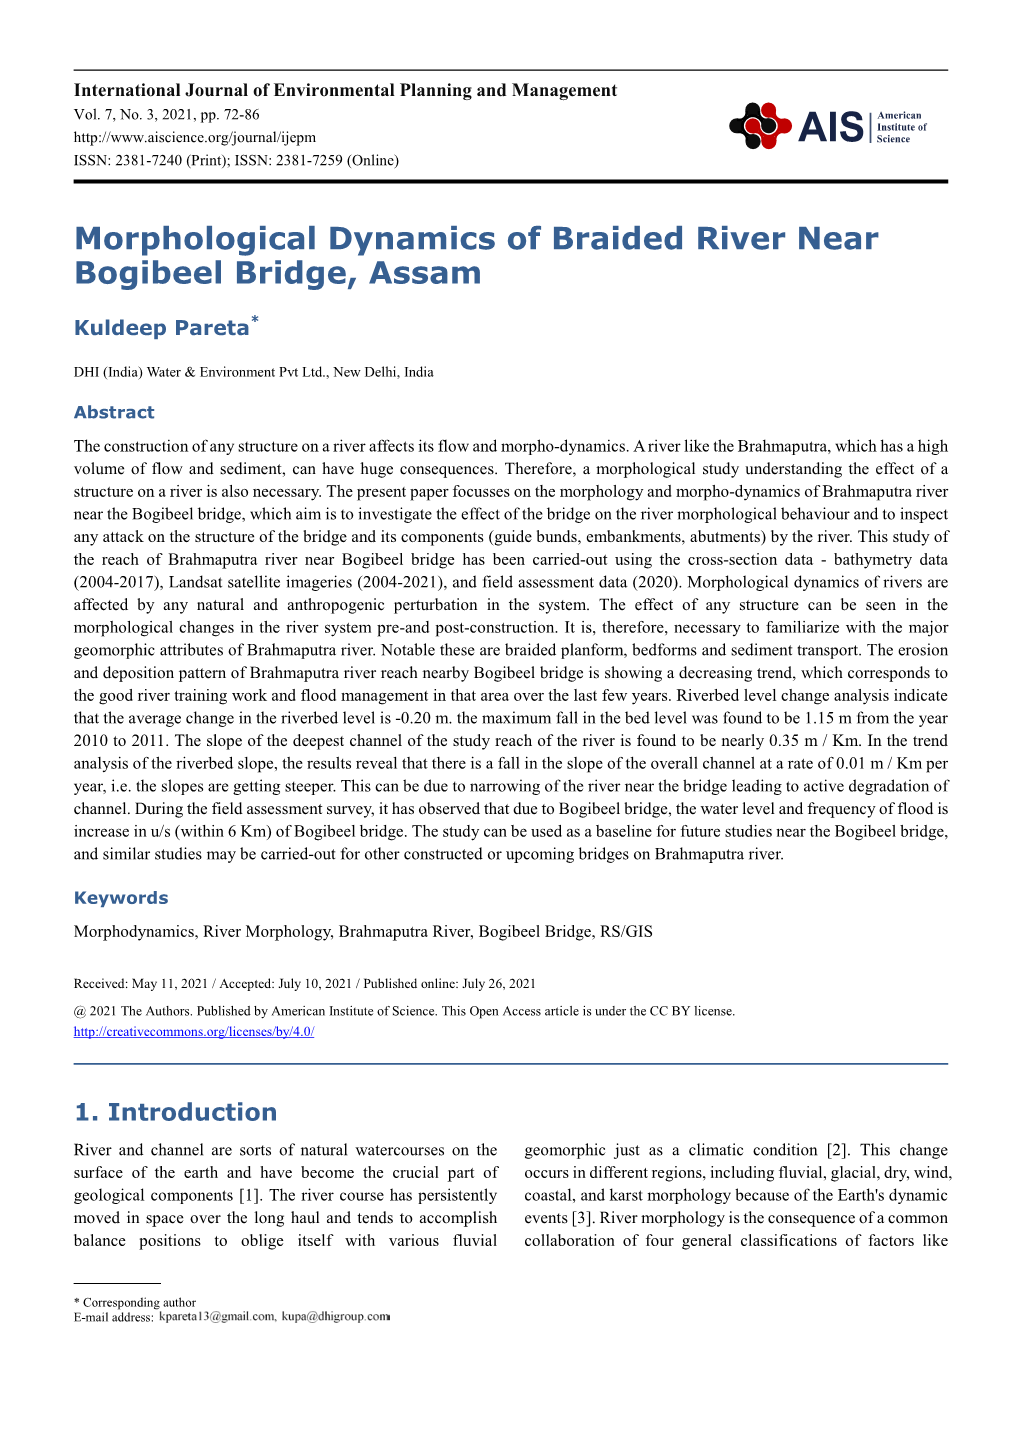 Morphological Dynamics of Braided River Near Bogibeel Bridge, Assam